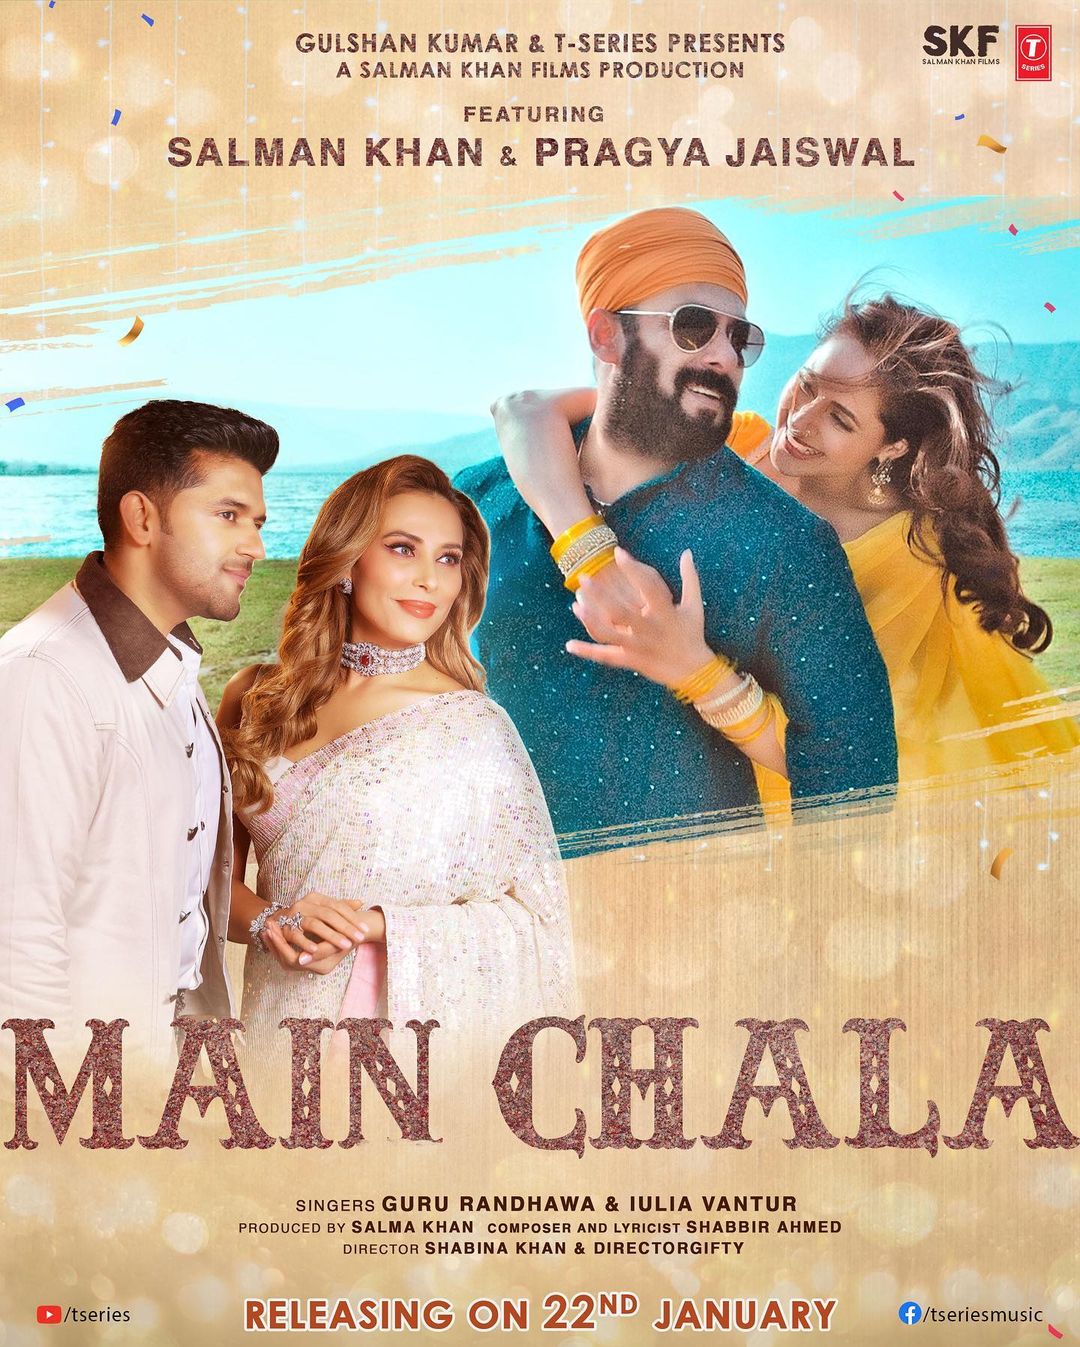 EXCLUSIVE: Pragya Jaiswal on her role edited from Antim, Akhanda success &  romancing Salman Khan in Main Chala | PINKVILLA